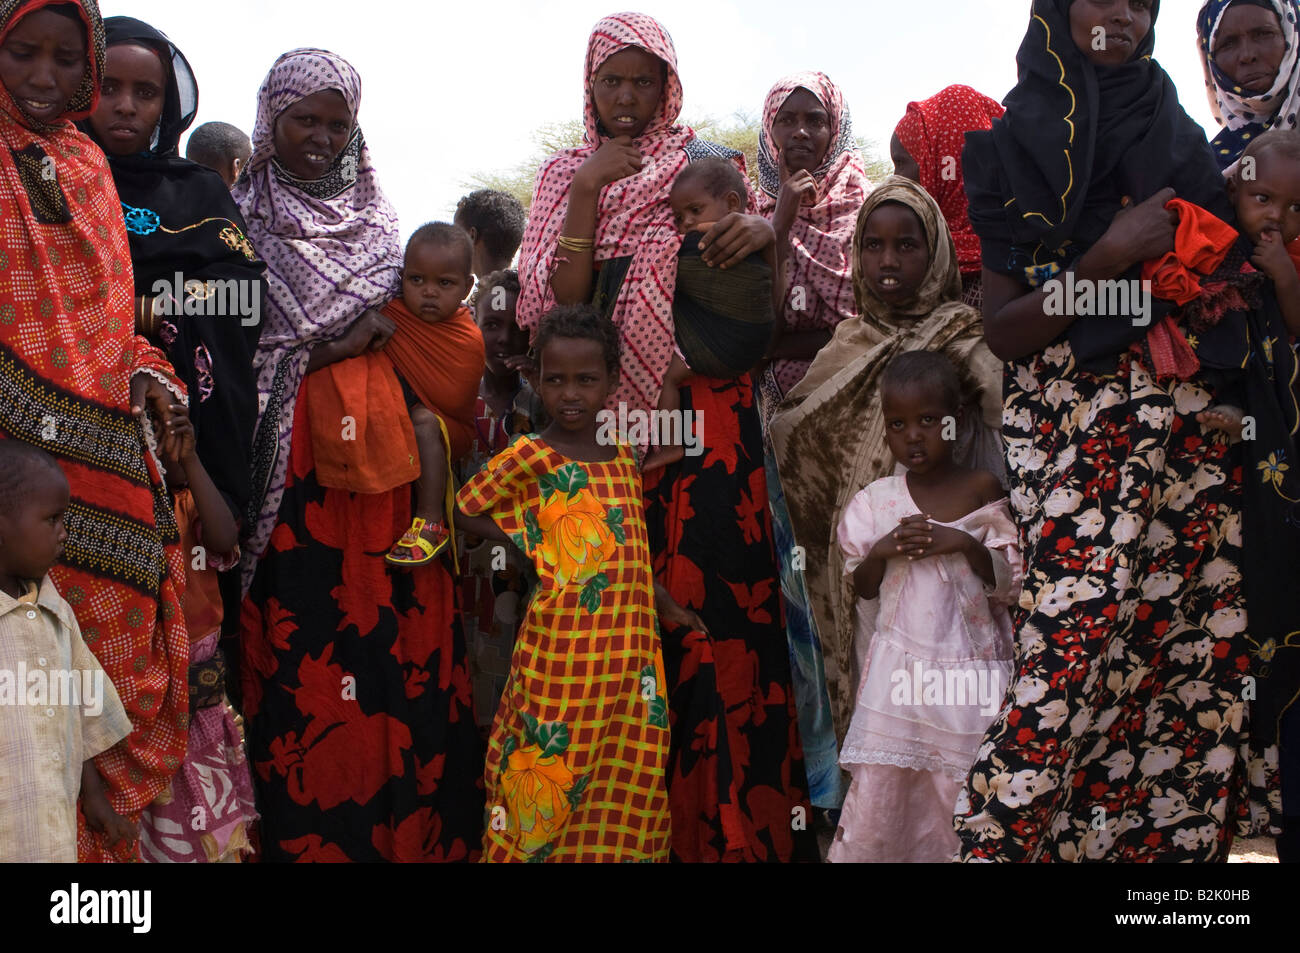 Somali people in Ethiopia, Africa. Stock Photo